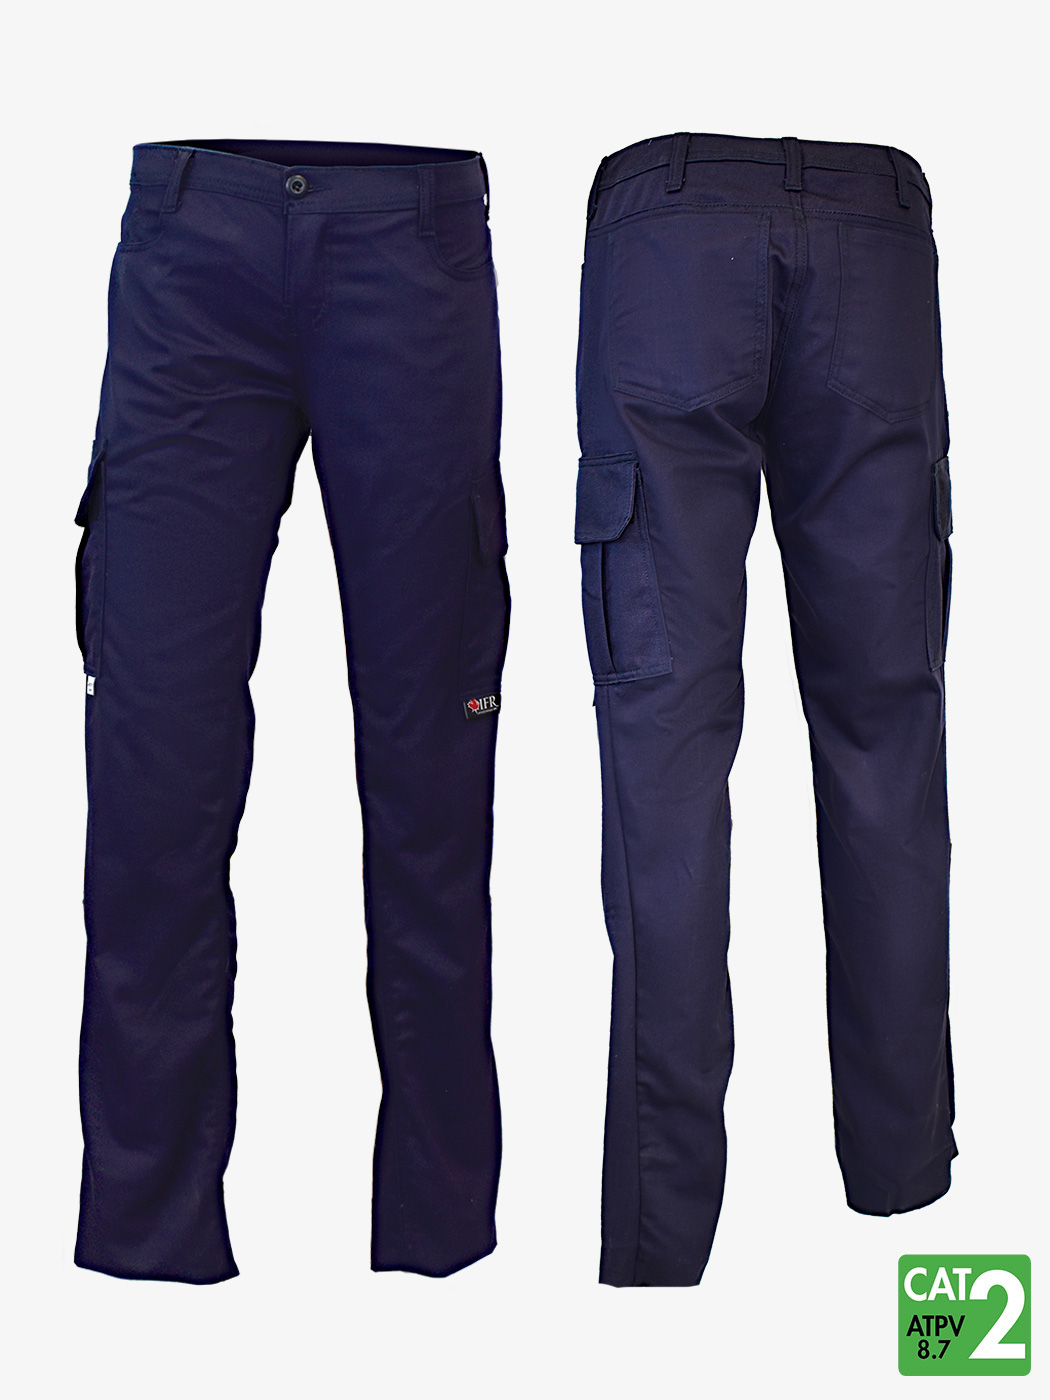 UltraSoft® 9 oz Flame Resistant (FR) Women's Cargo Pants